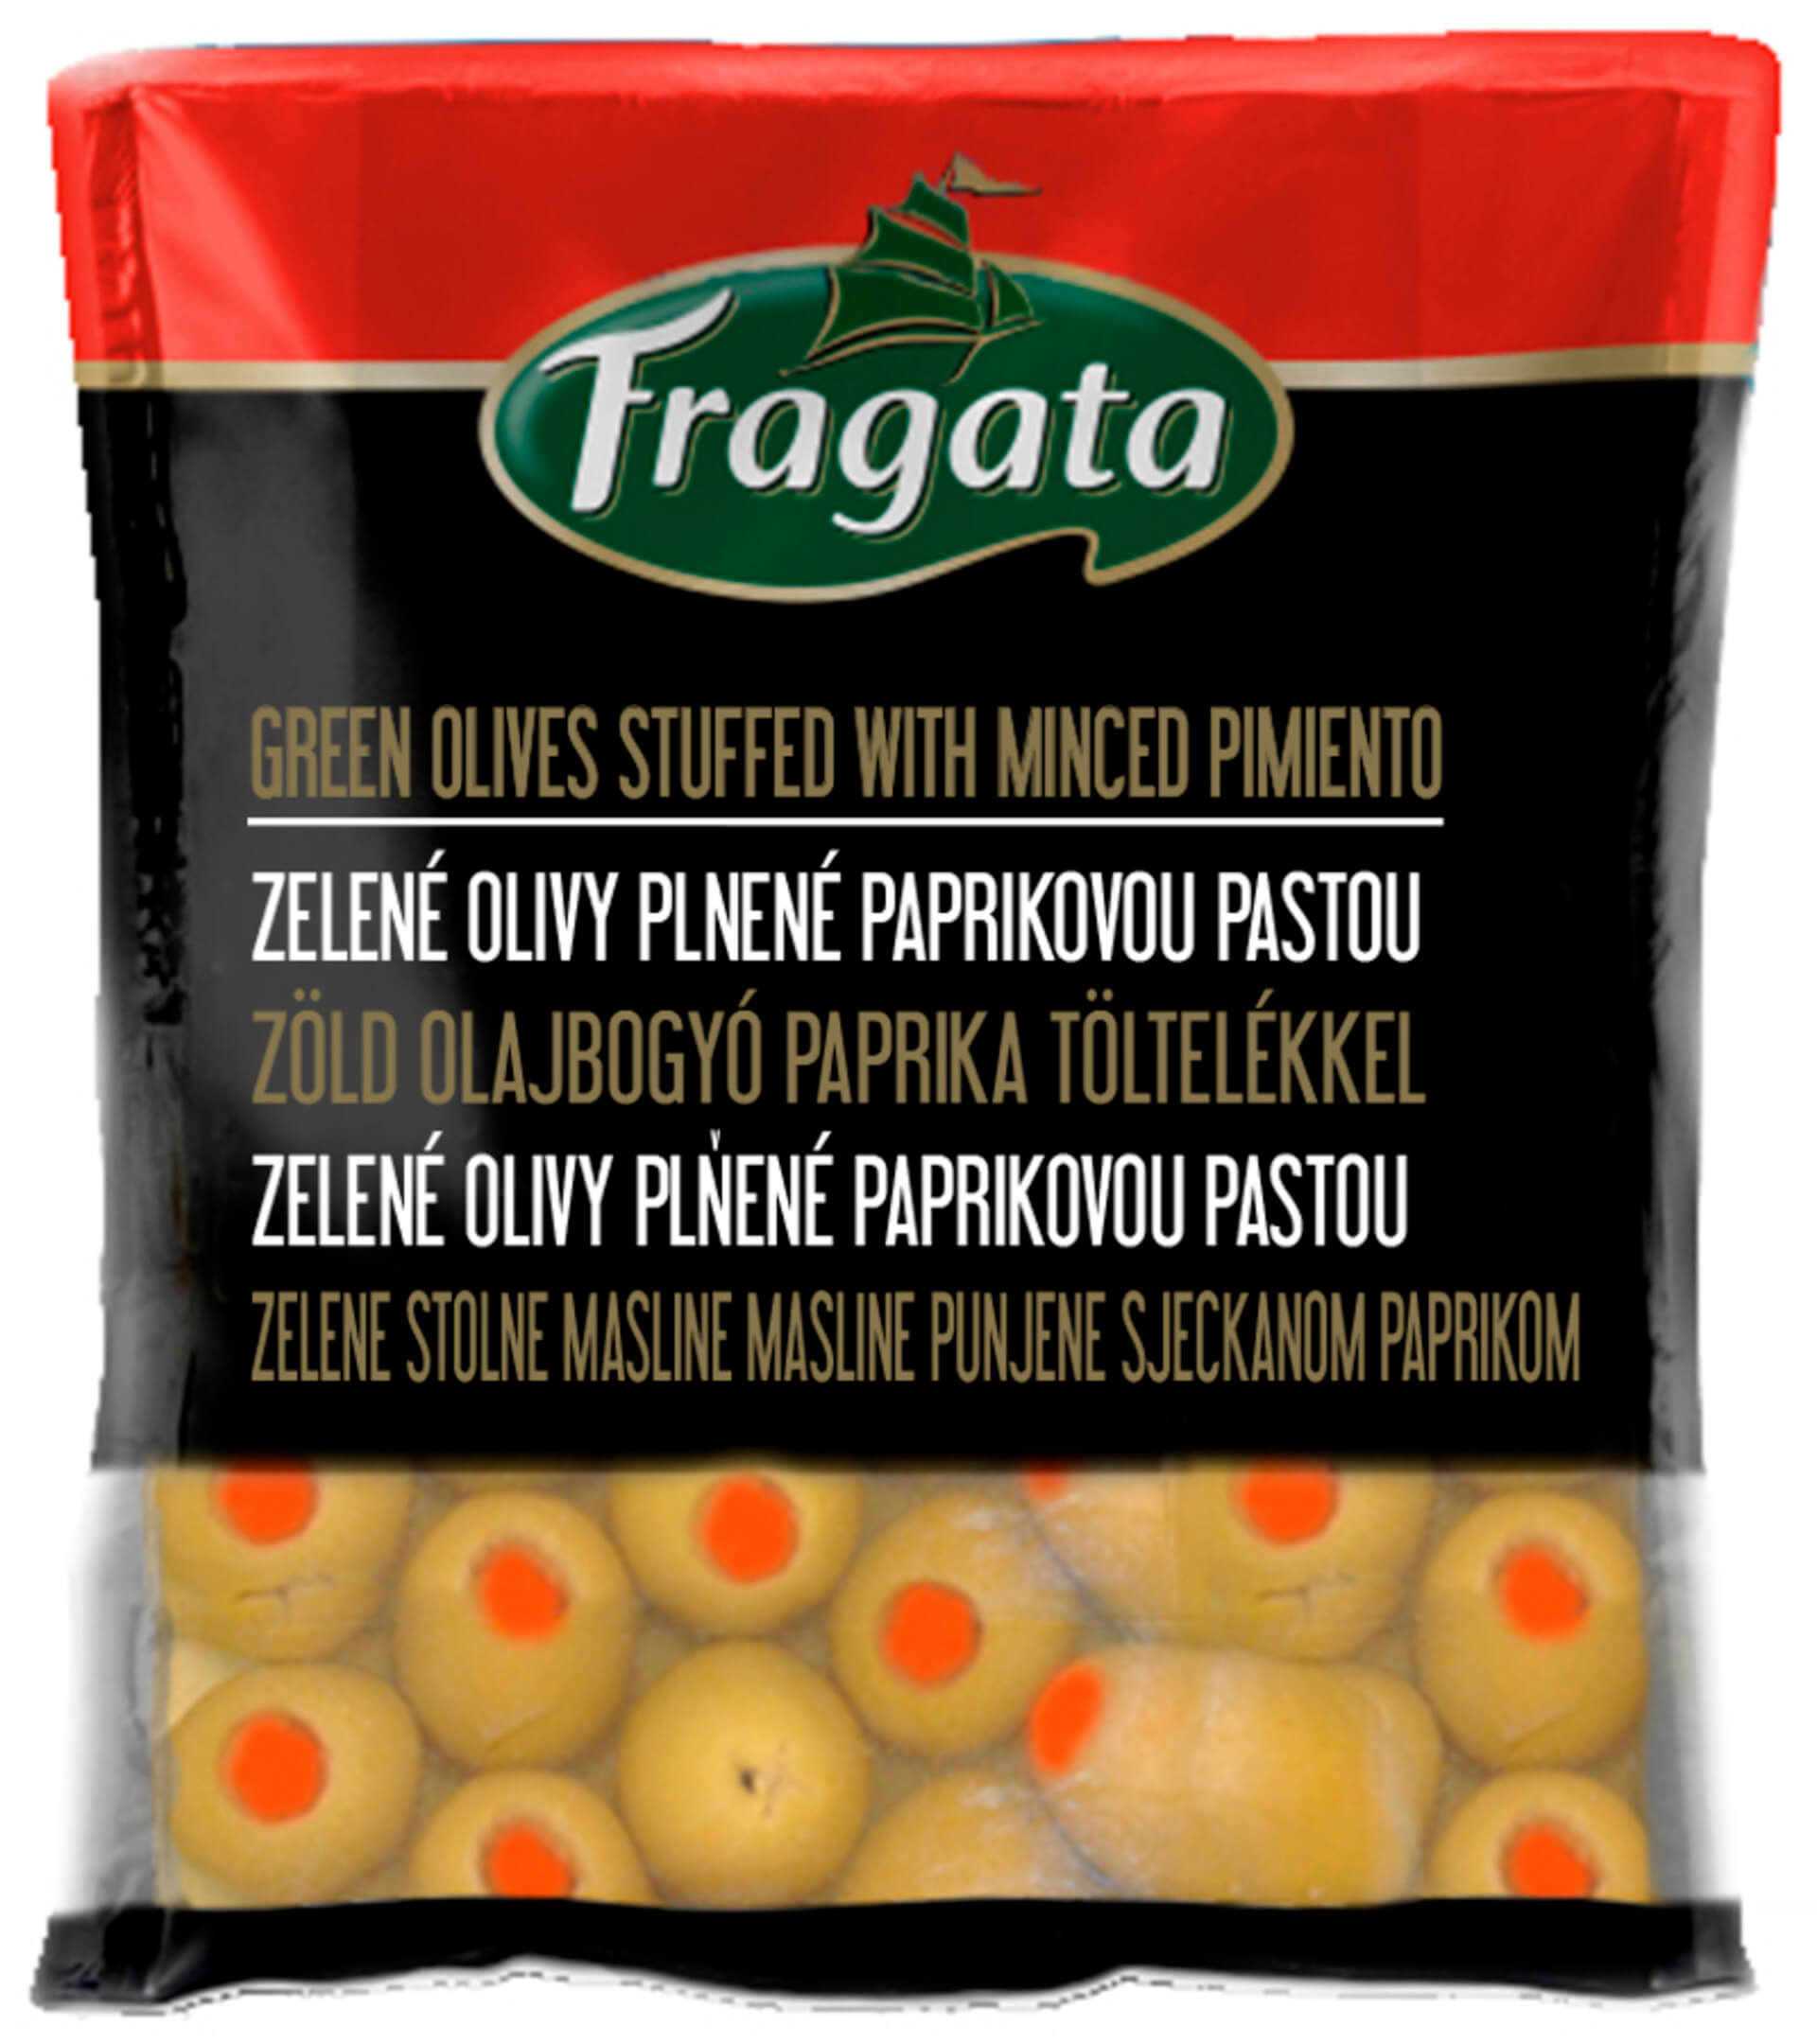 E-shop Fragata Zelené olivy plnené paprikovou pastou 160 g